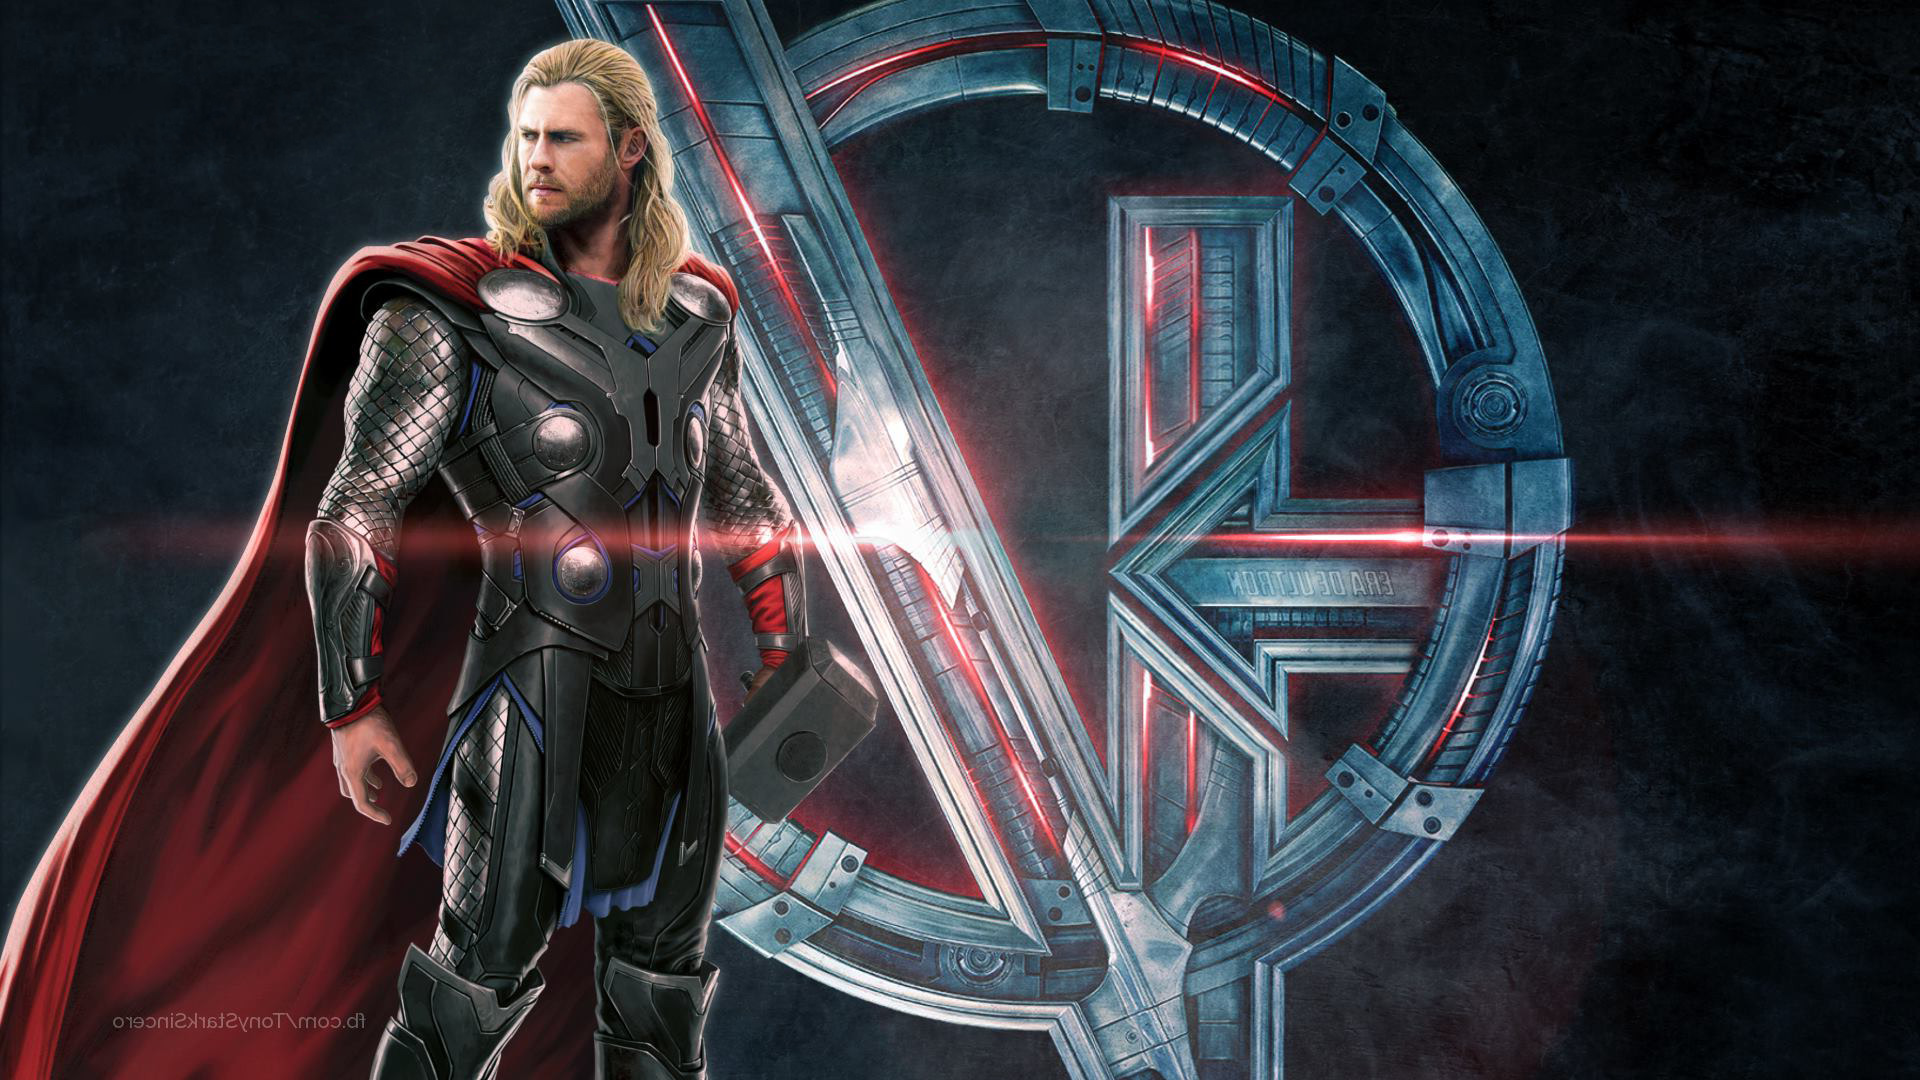 The Avengers, Avengers: Age Of Ultron, Superhero, Symbols, Thor, Chris Hemsworth, Movies, Concept Art Wallpaper